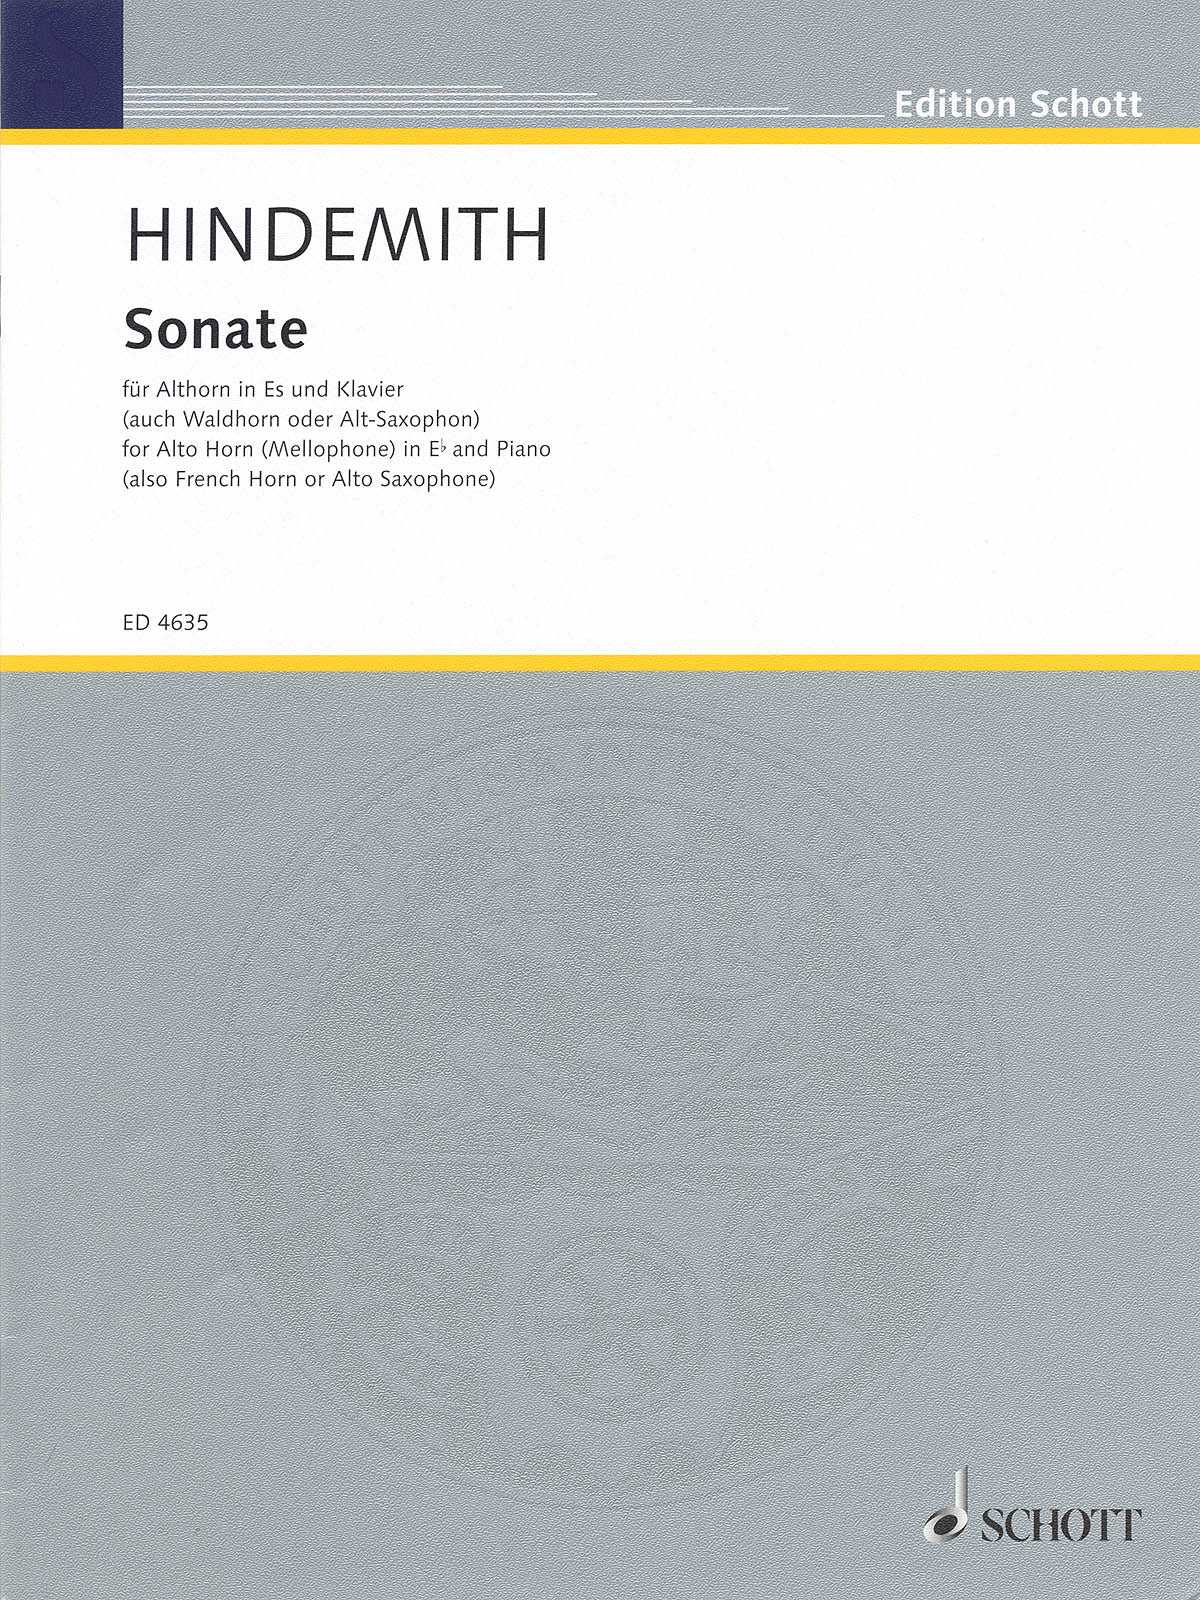 Hindemith: Sonata for Alto Horn